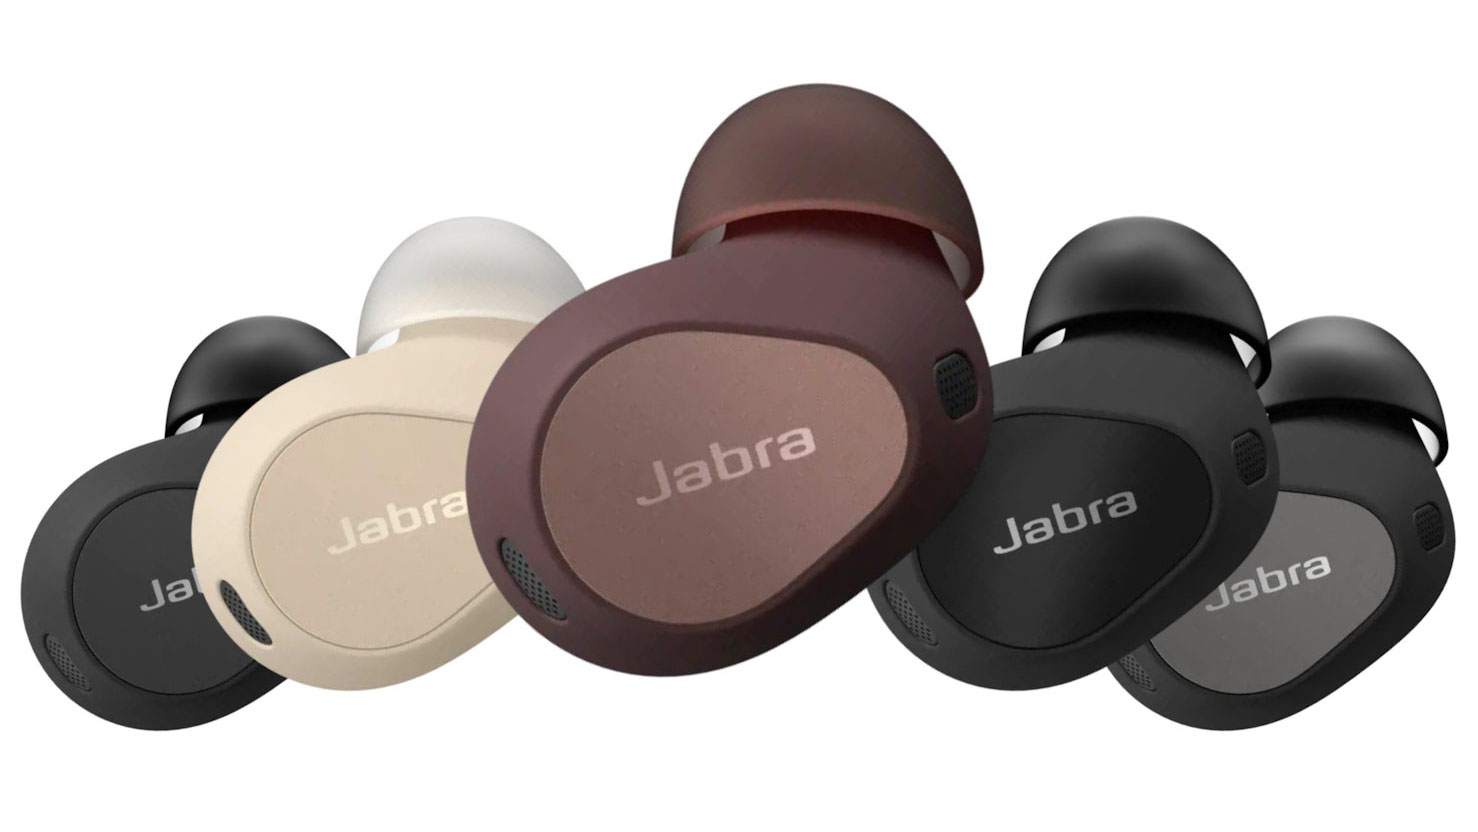 Jabra introduces the Elite 10 and Elite 8 Active headphones